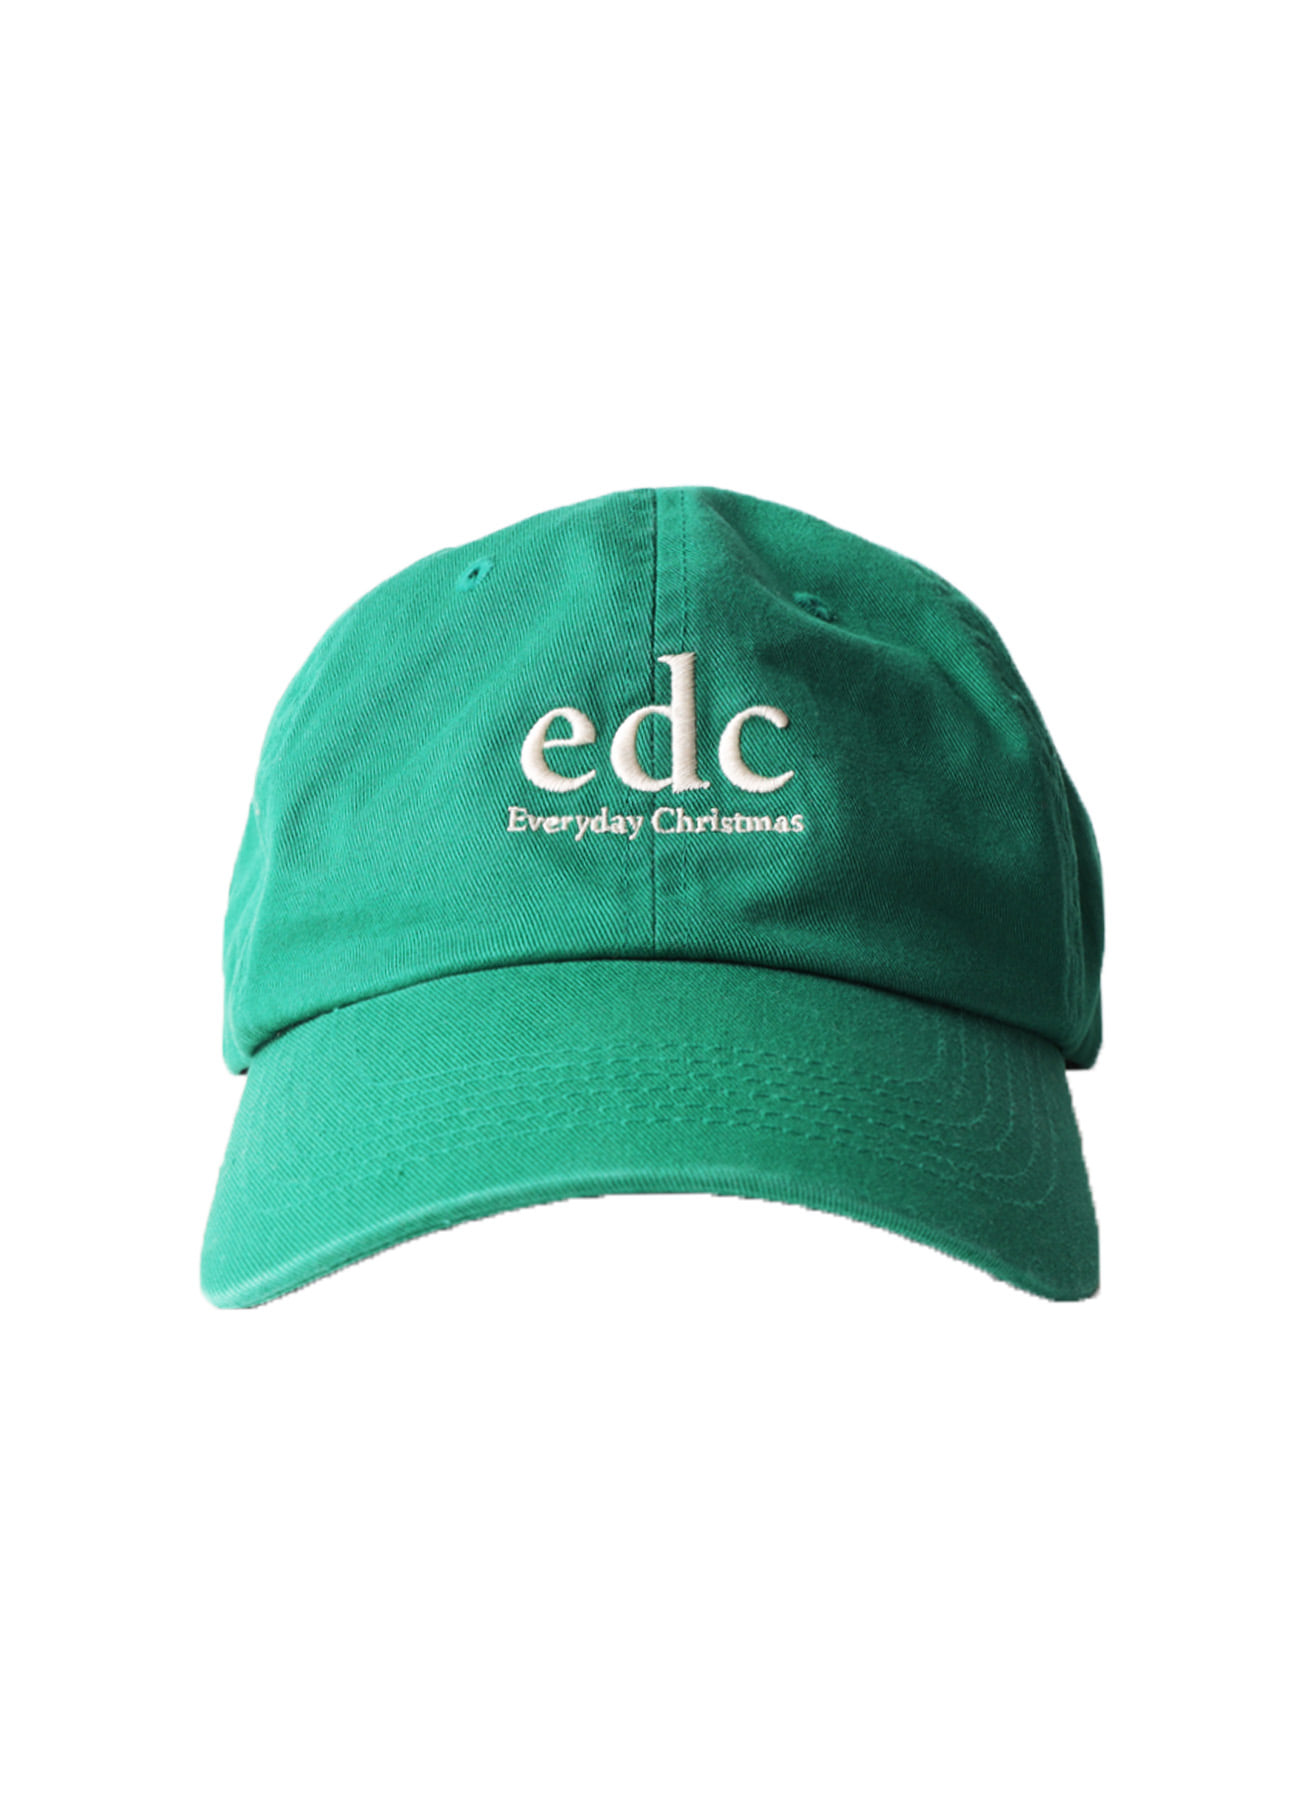 EDC 워싱캡 (green)